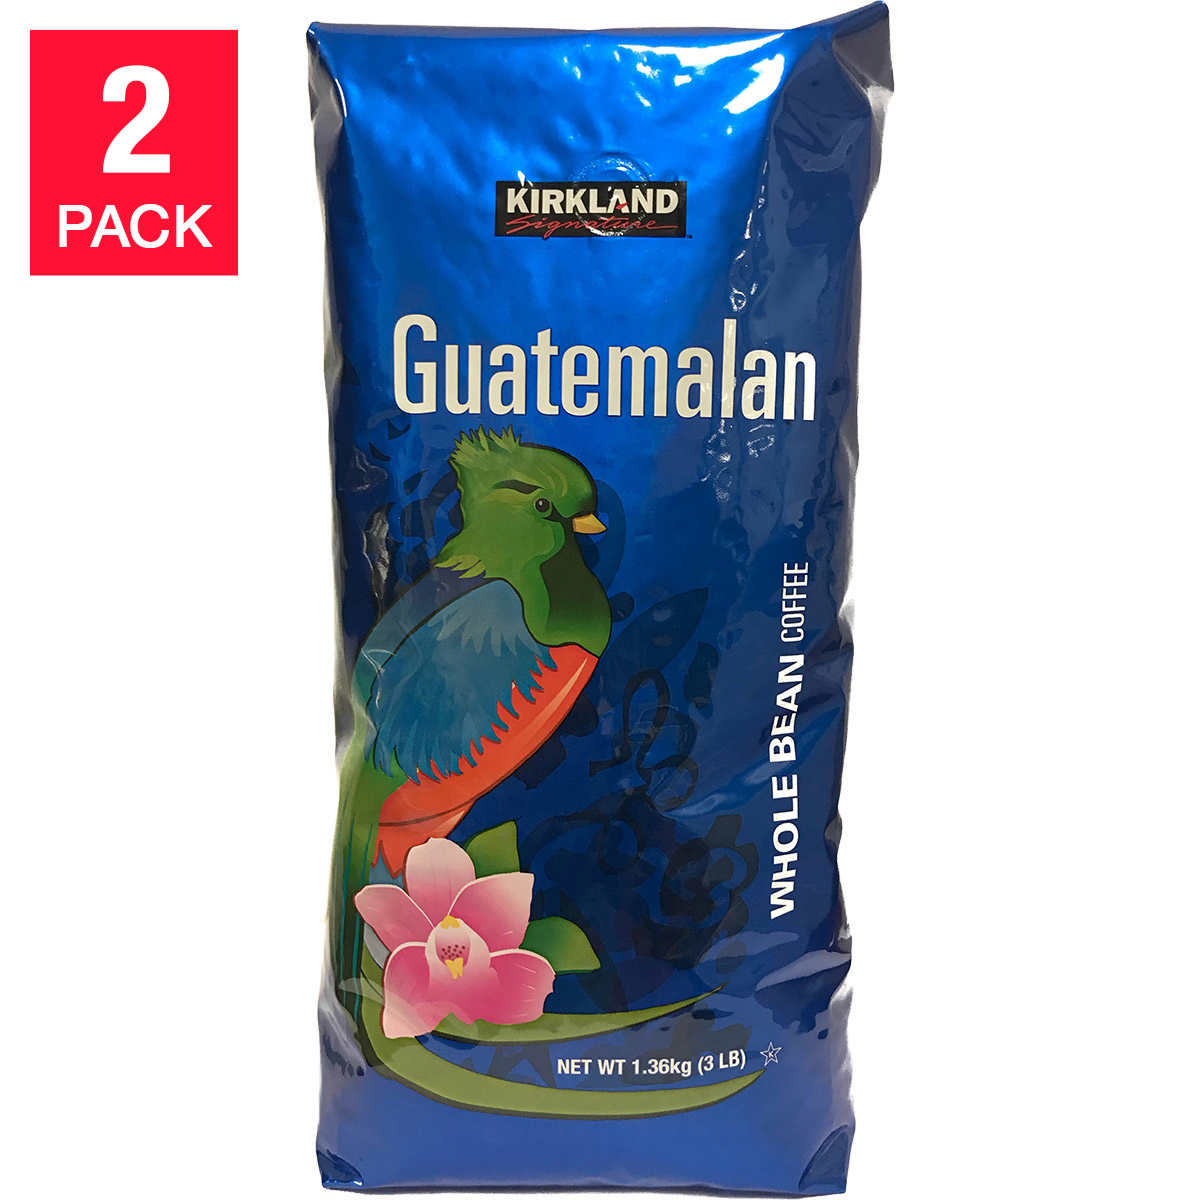 Kirkland Signature Guatemalan Coffee 3 lb 2-pack